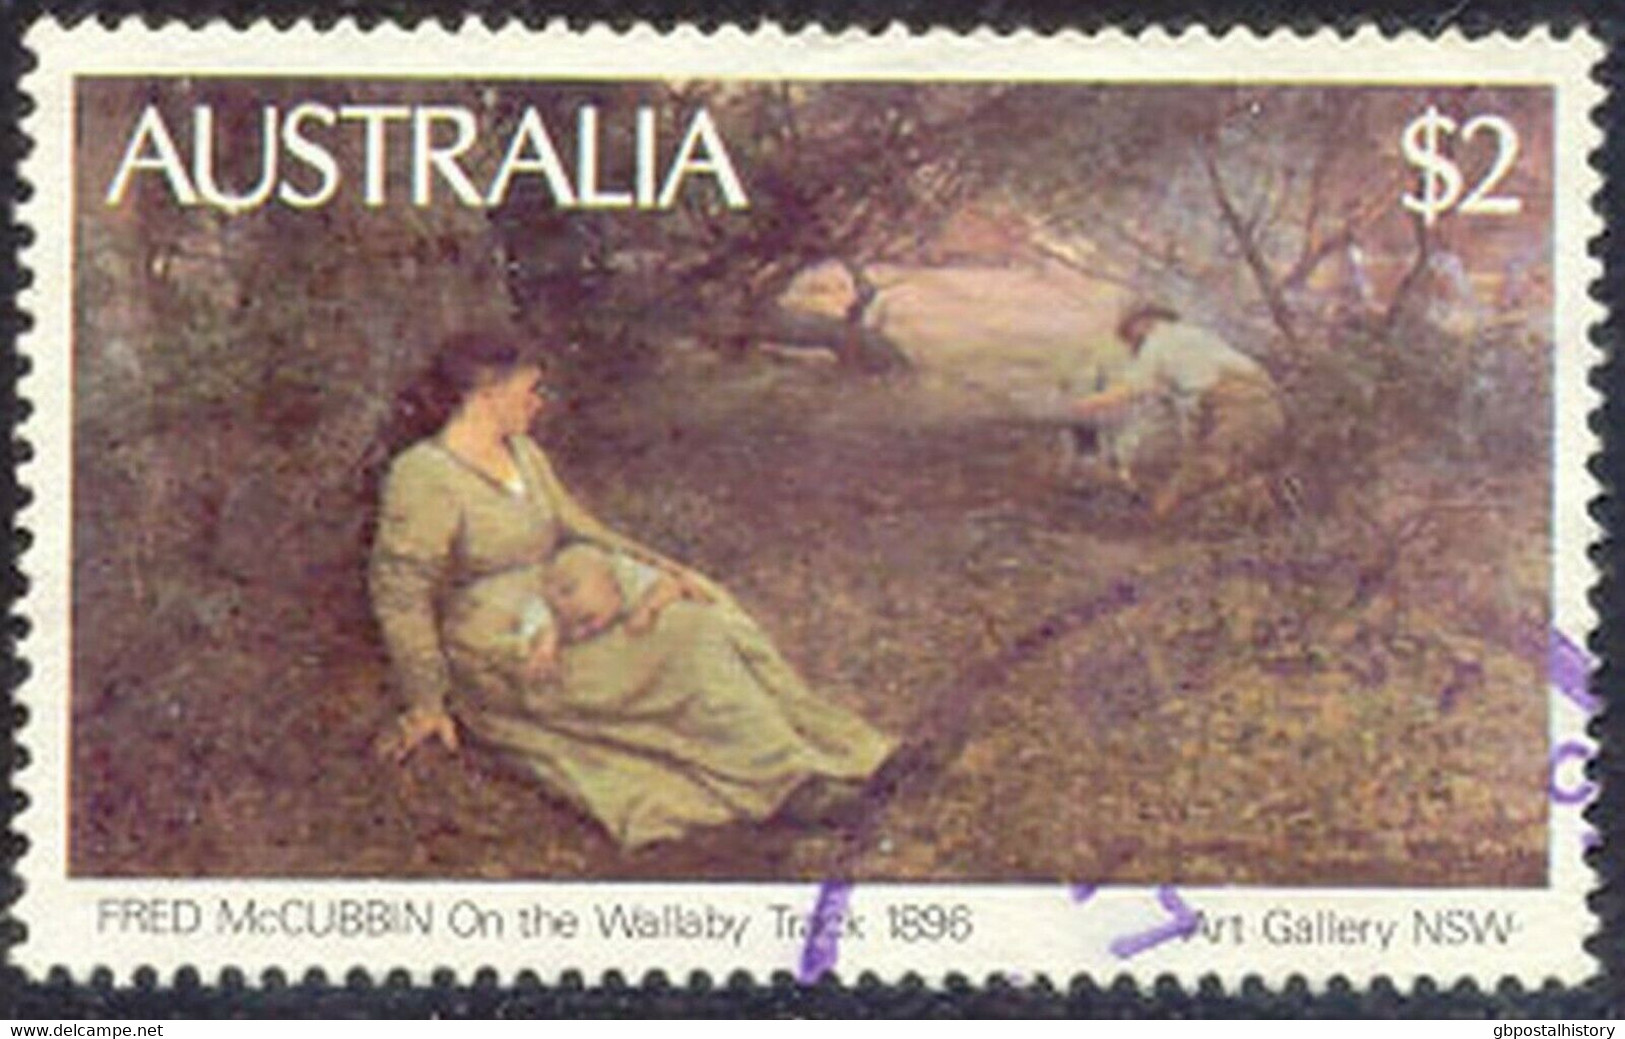 AUSTRALIA 1981 Painting $ 2 Superb Used COLOR VARIETY - Variedades Y Curiosidades